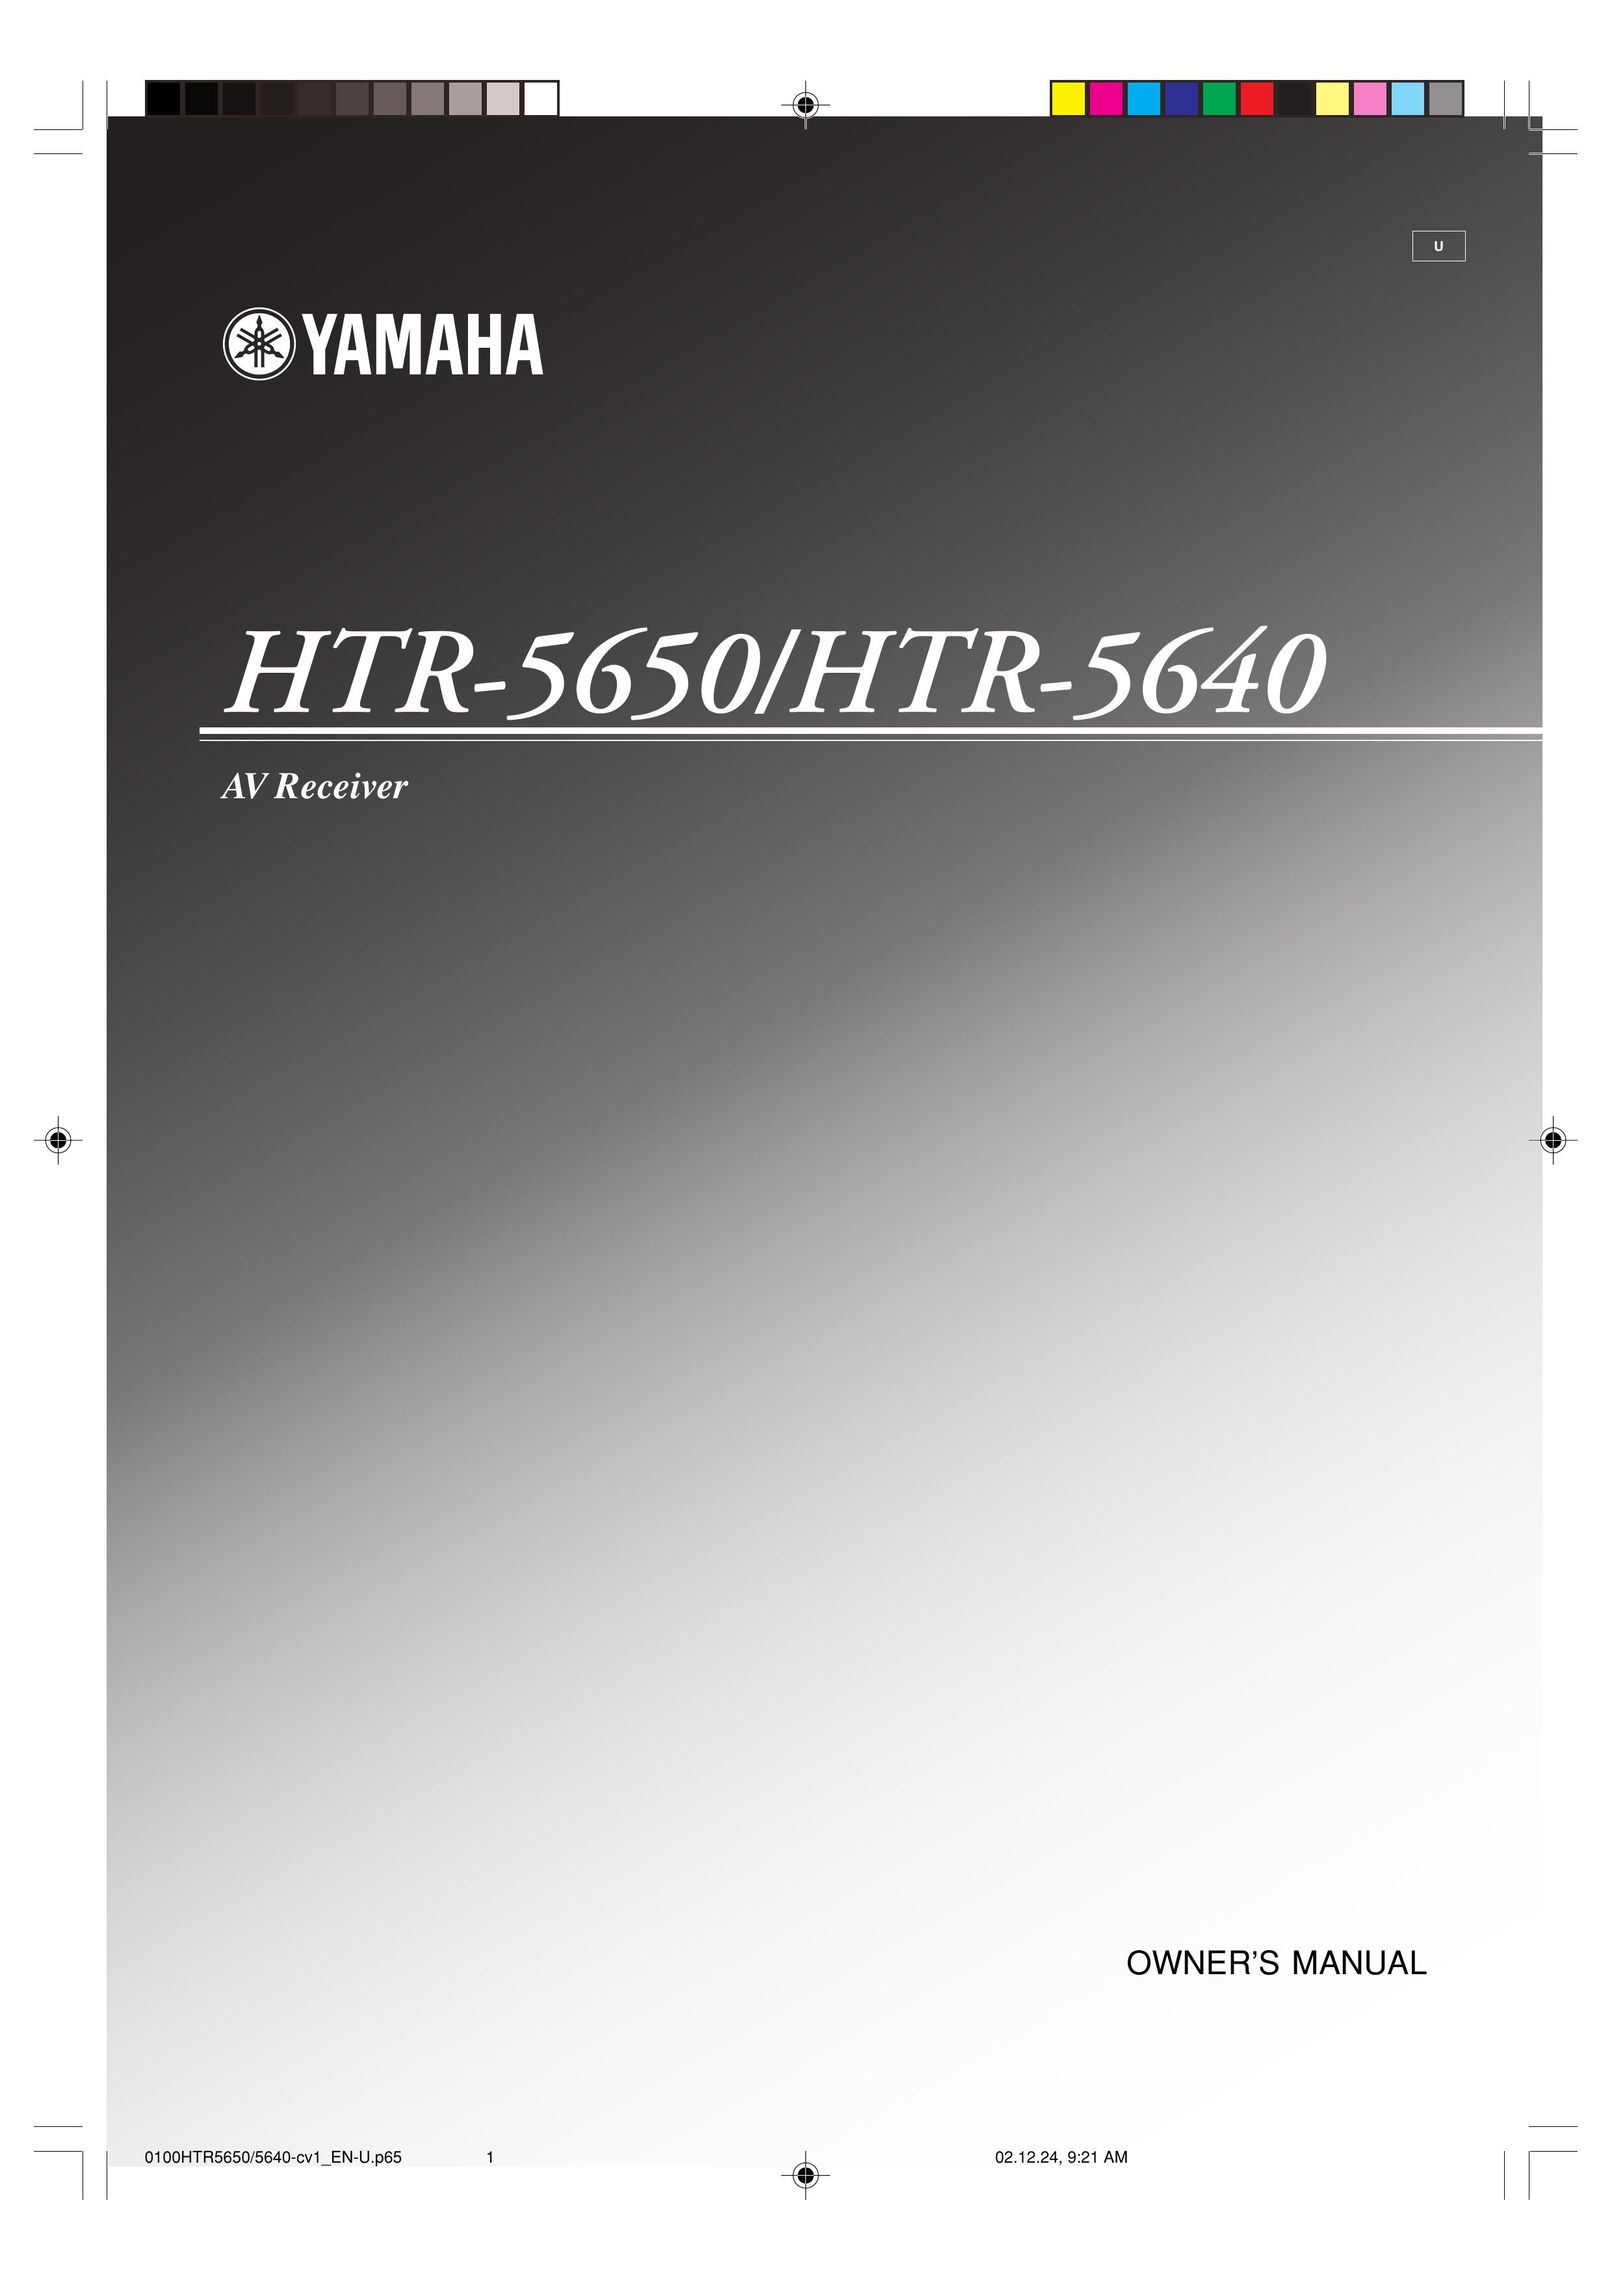 Yamaha HTR-5640 Stereo System User Manual